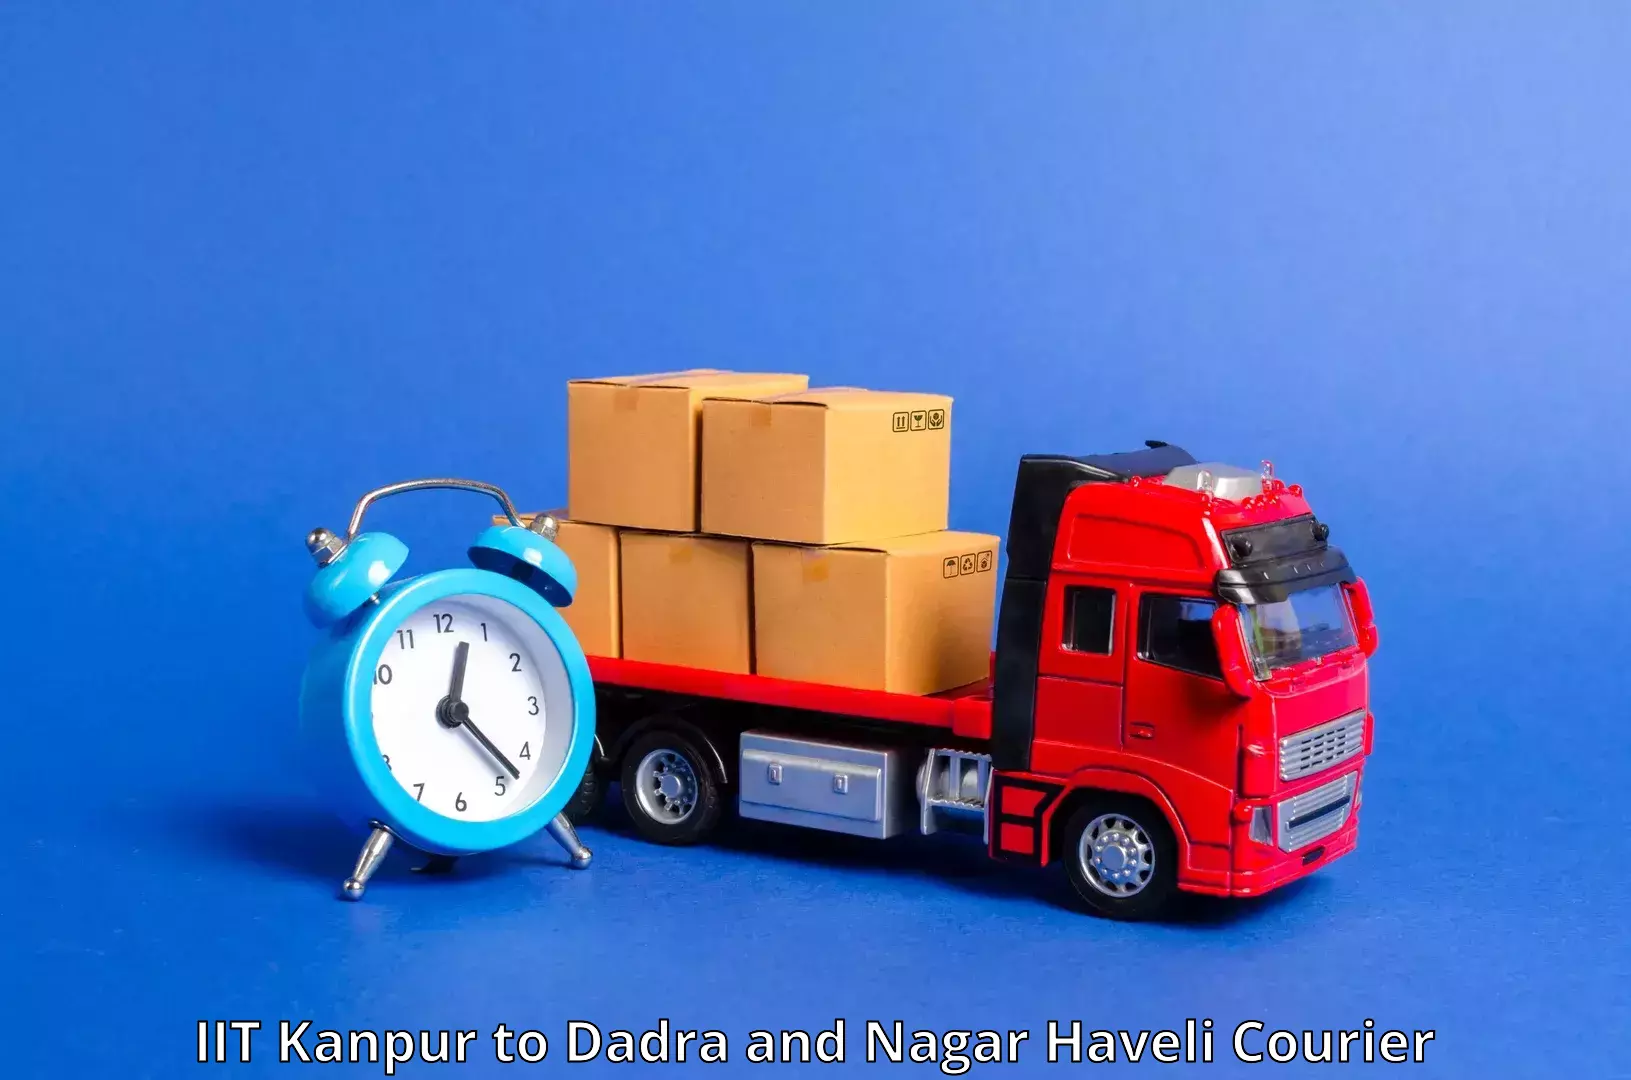 Global freight services IIT Kanpur to Silvassa